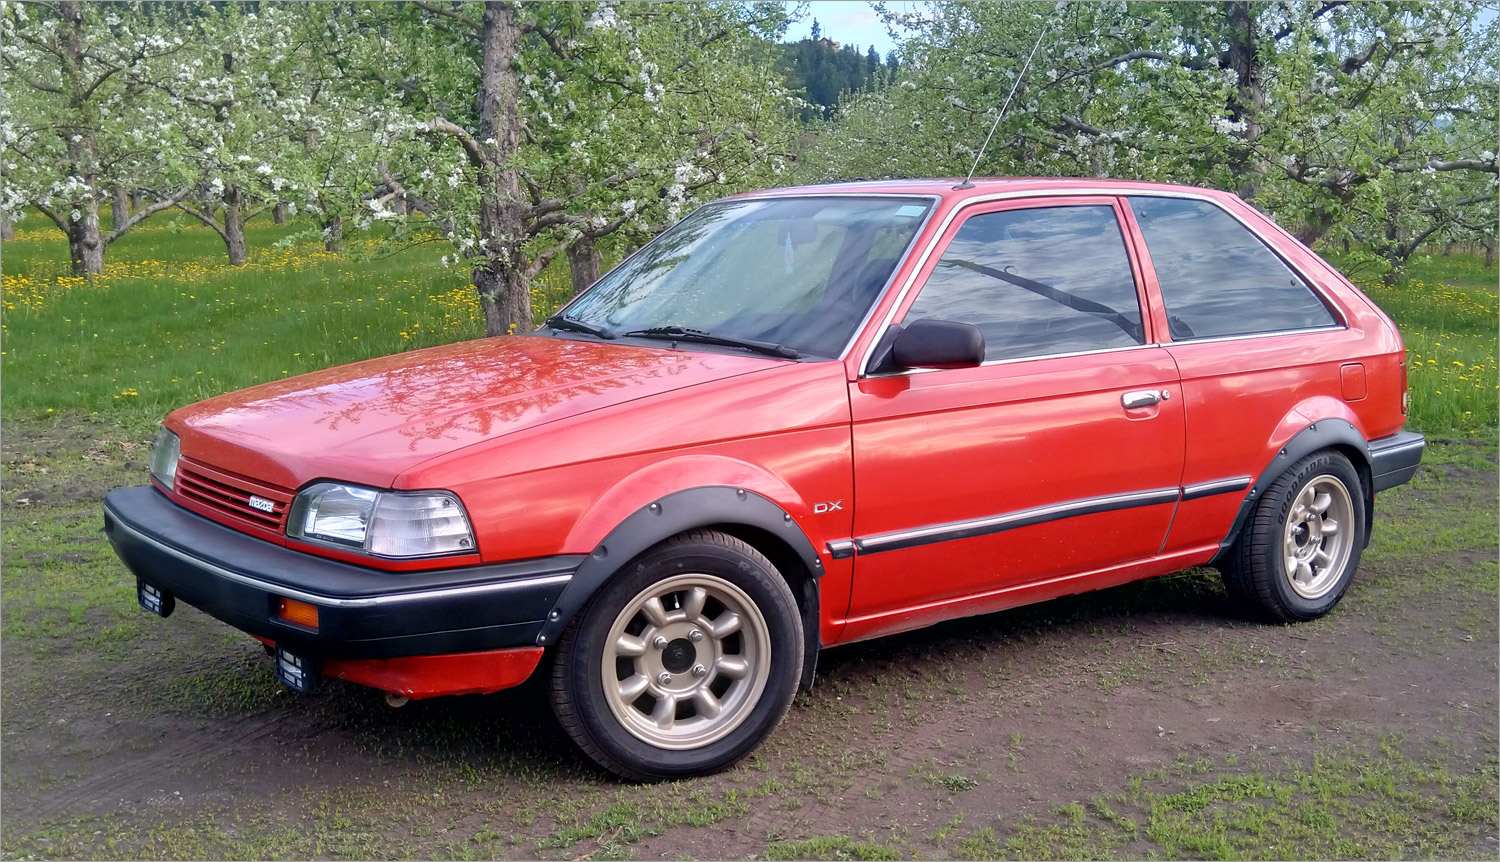 Ron's 1989 Mazda 323